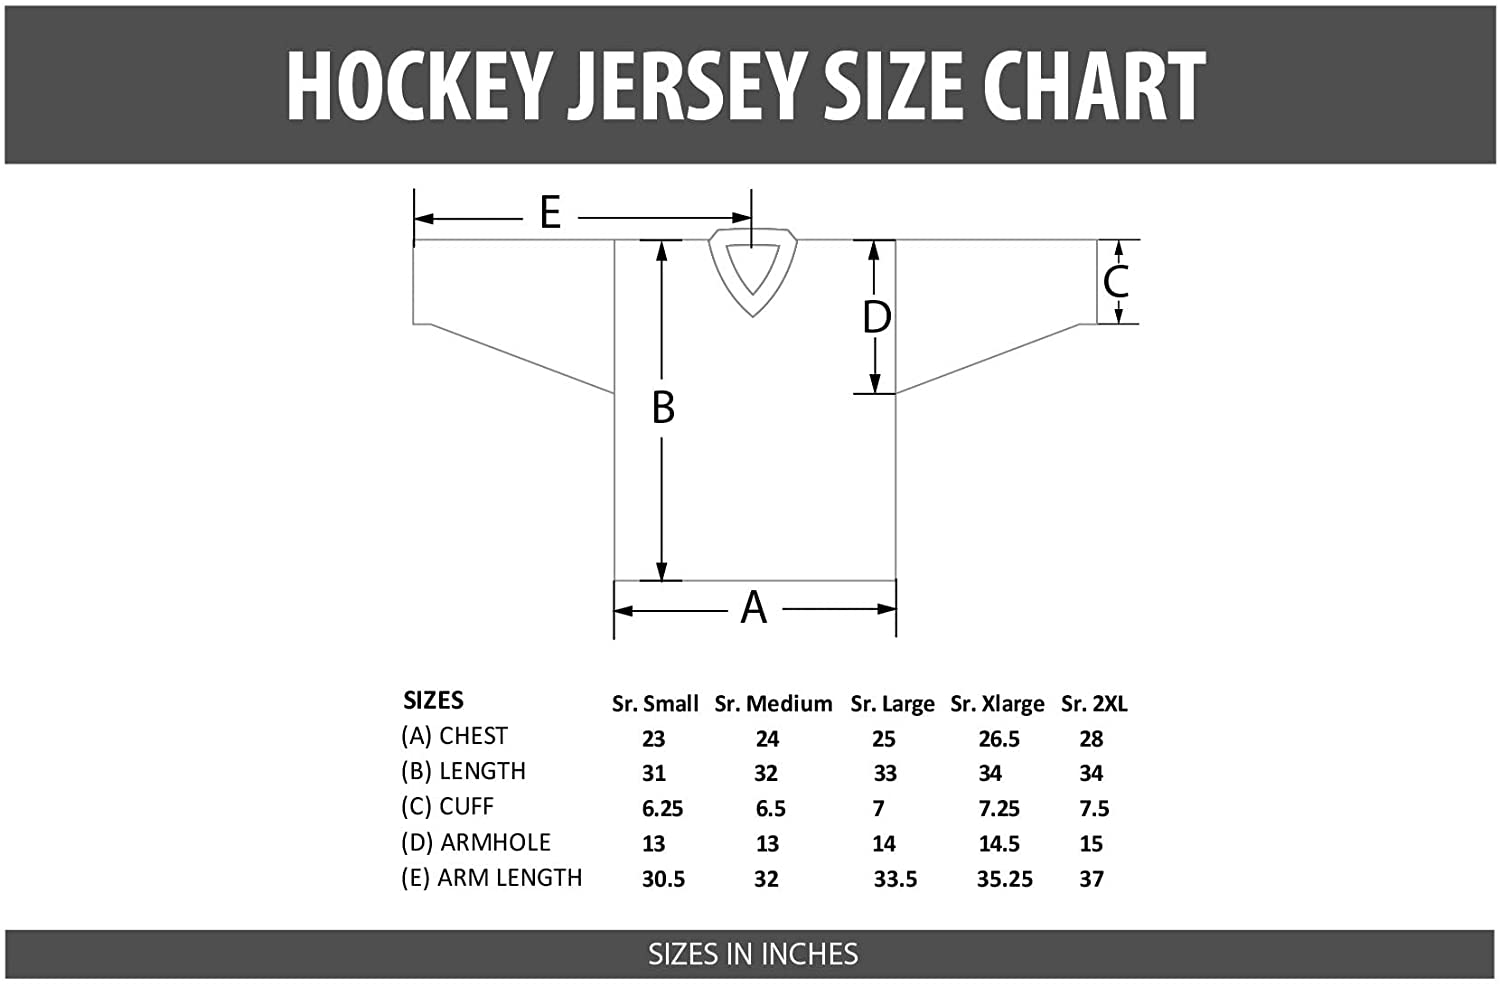 Letterkenny US No Regretzkys Personalized Screenprinted Hockey Jersey XXL